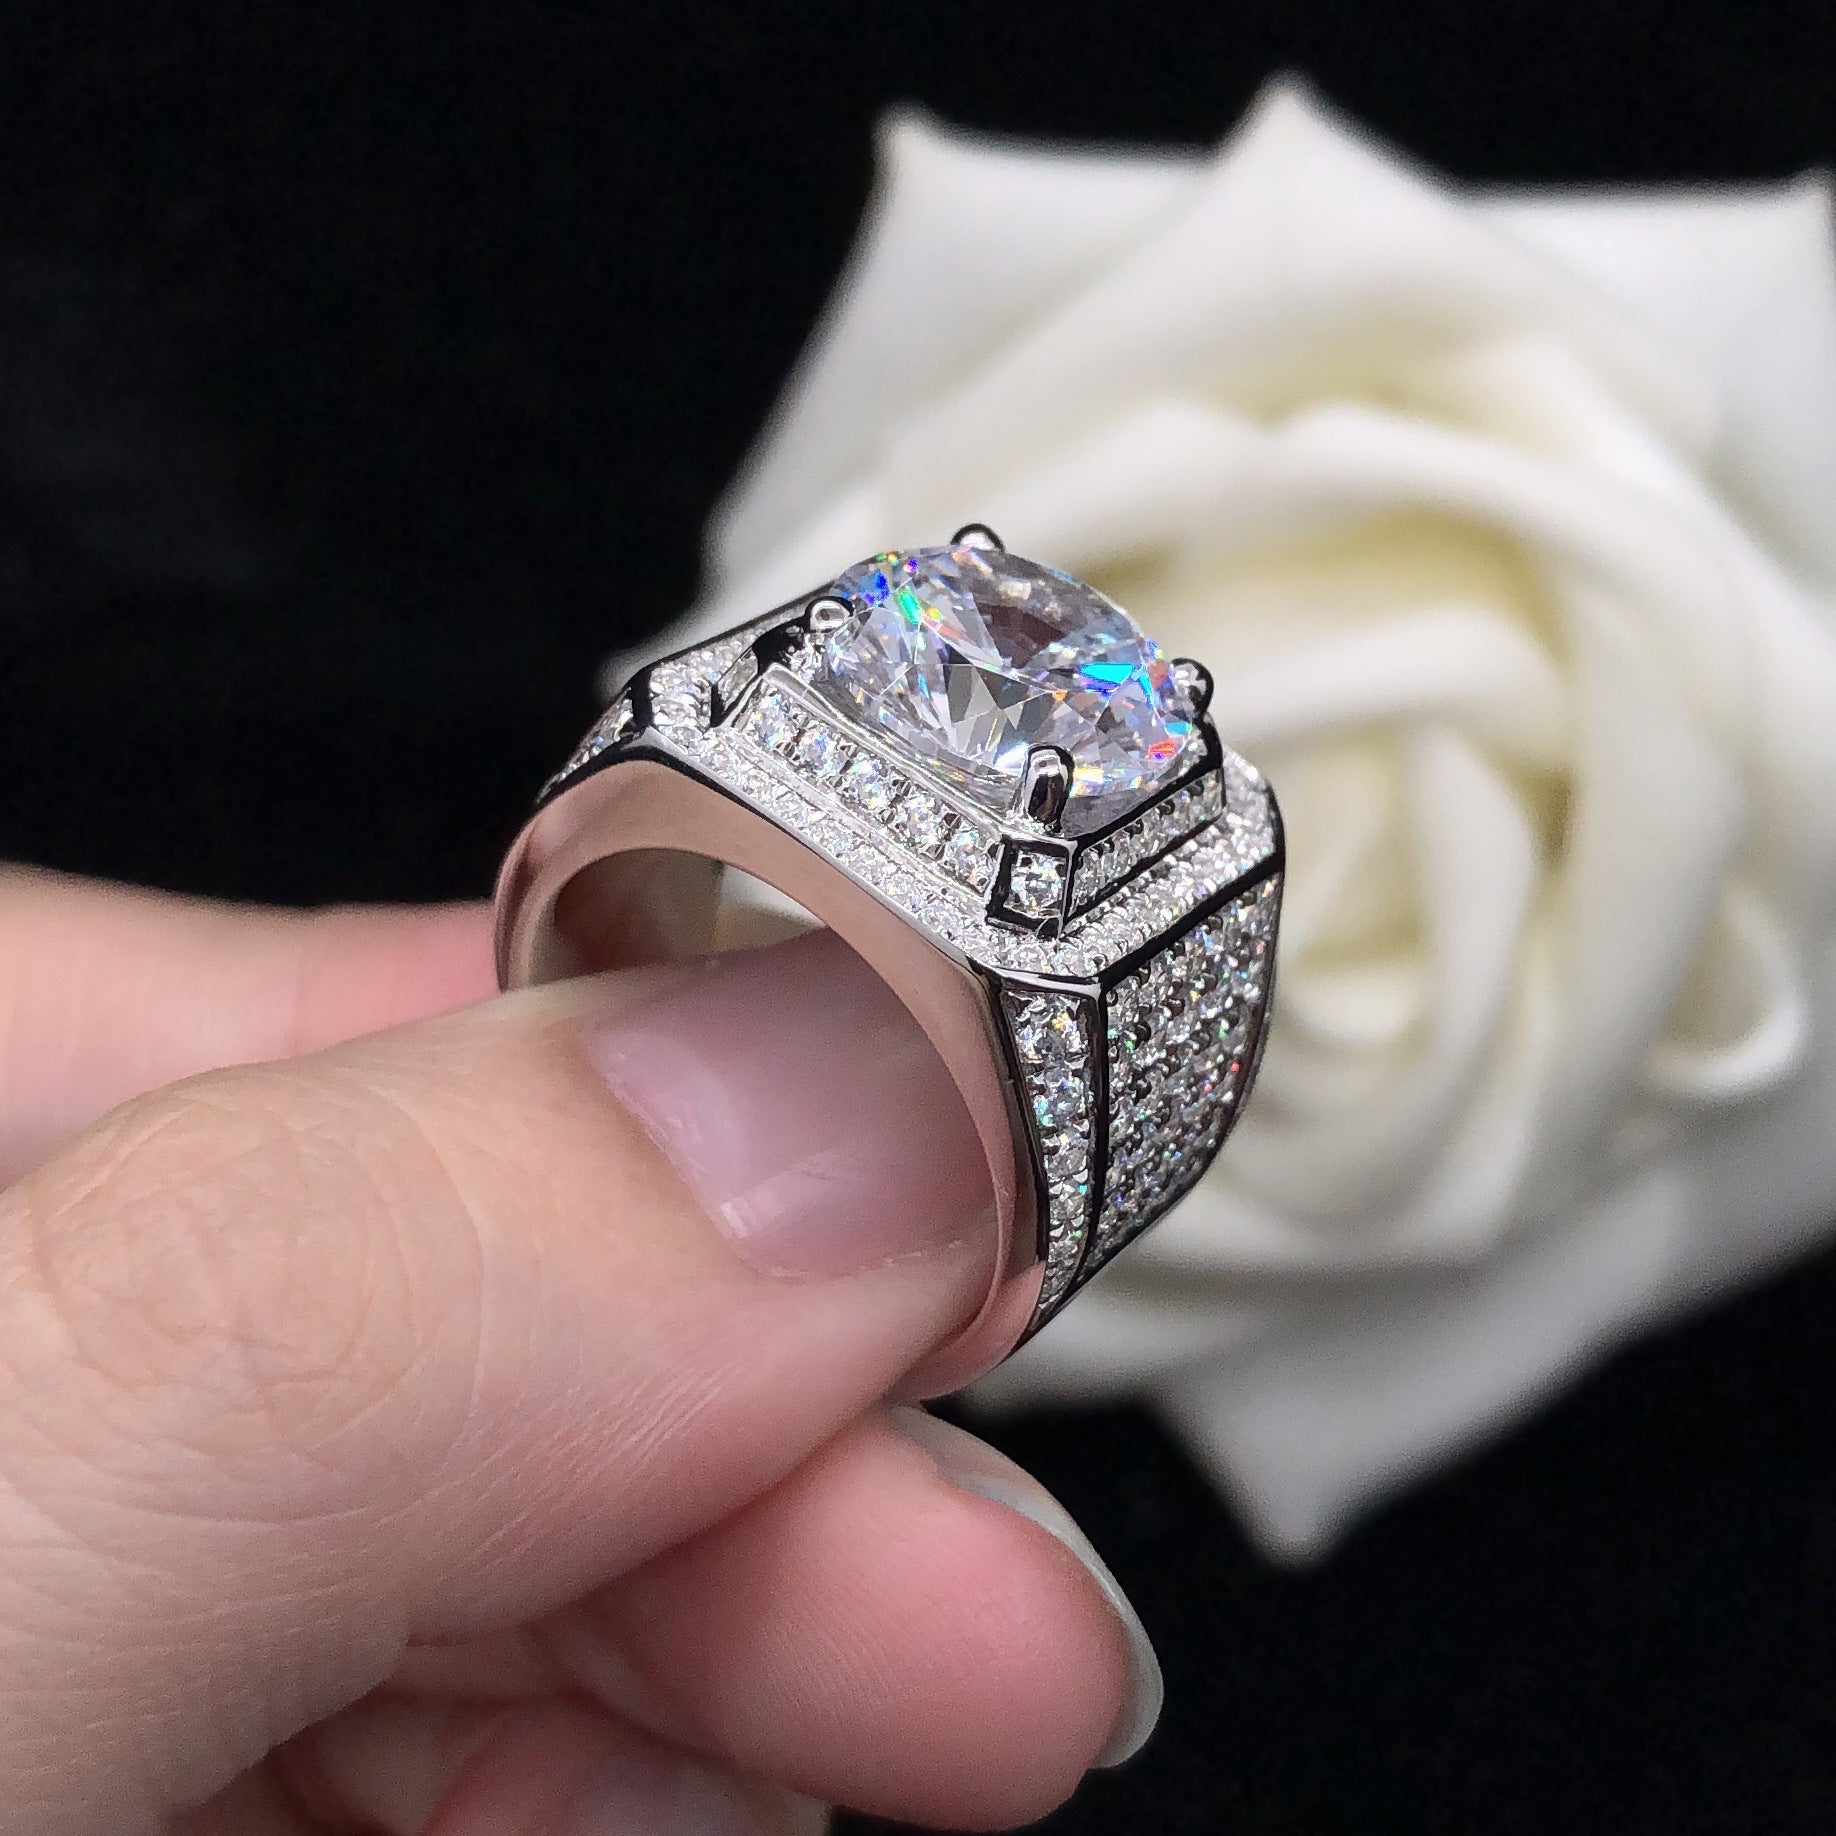 5 Carat Diamond Rings: Your Guide To Indulging | VRAI Created Diamonds